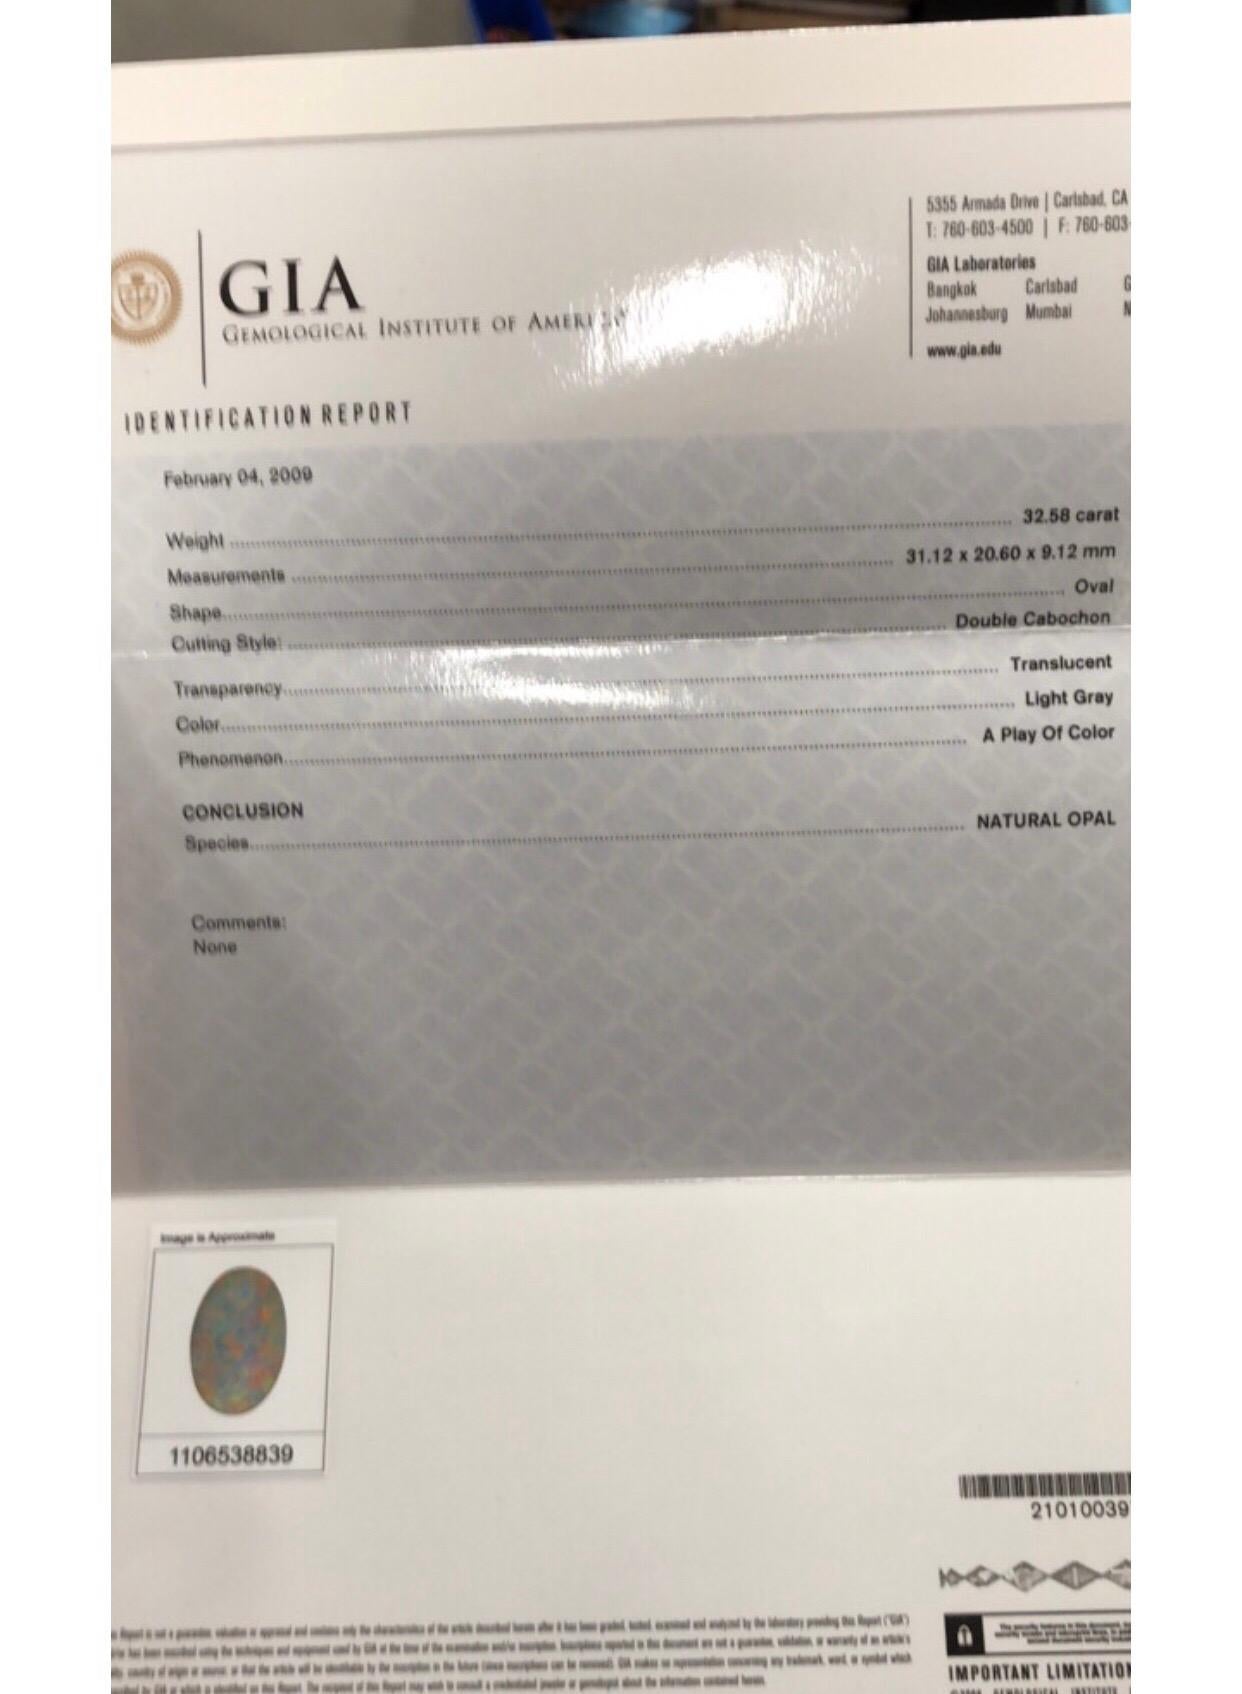 32.58 Carat Oval Opal ‘GIA’ Set on a Platinum Pendant 1